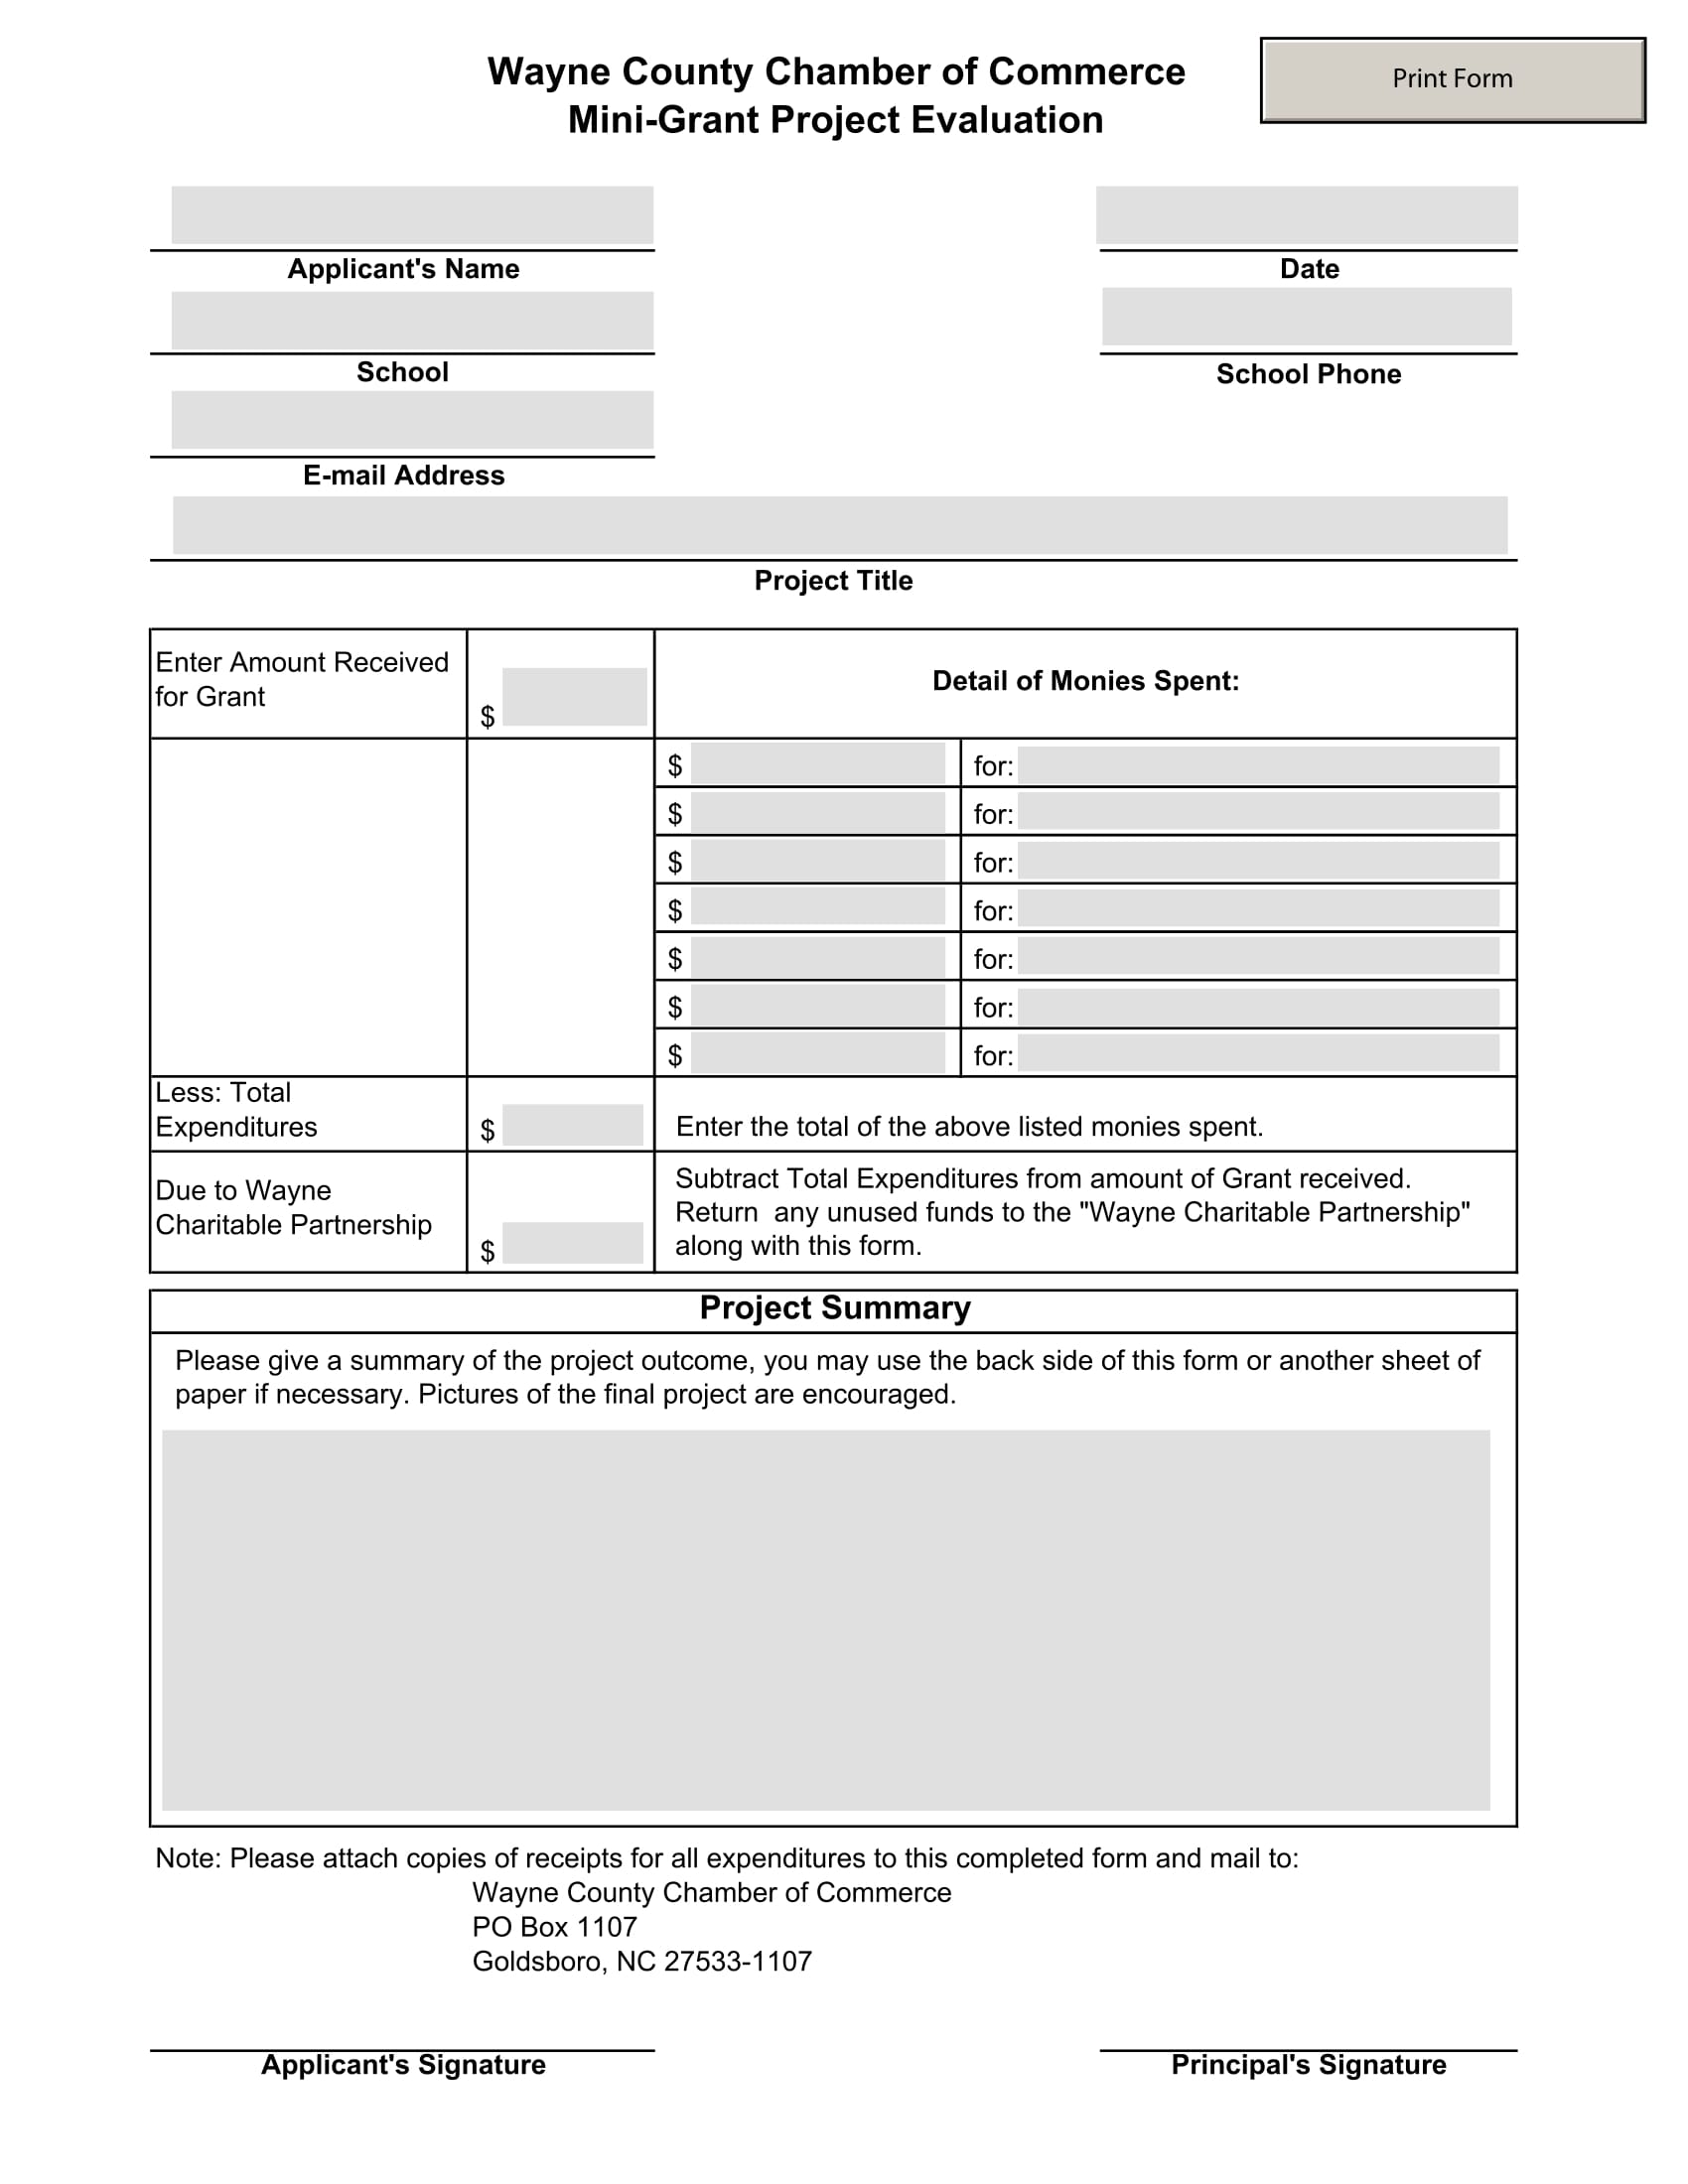 mini grant project evaluation form 1